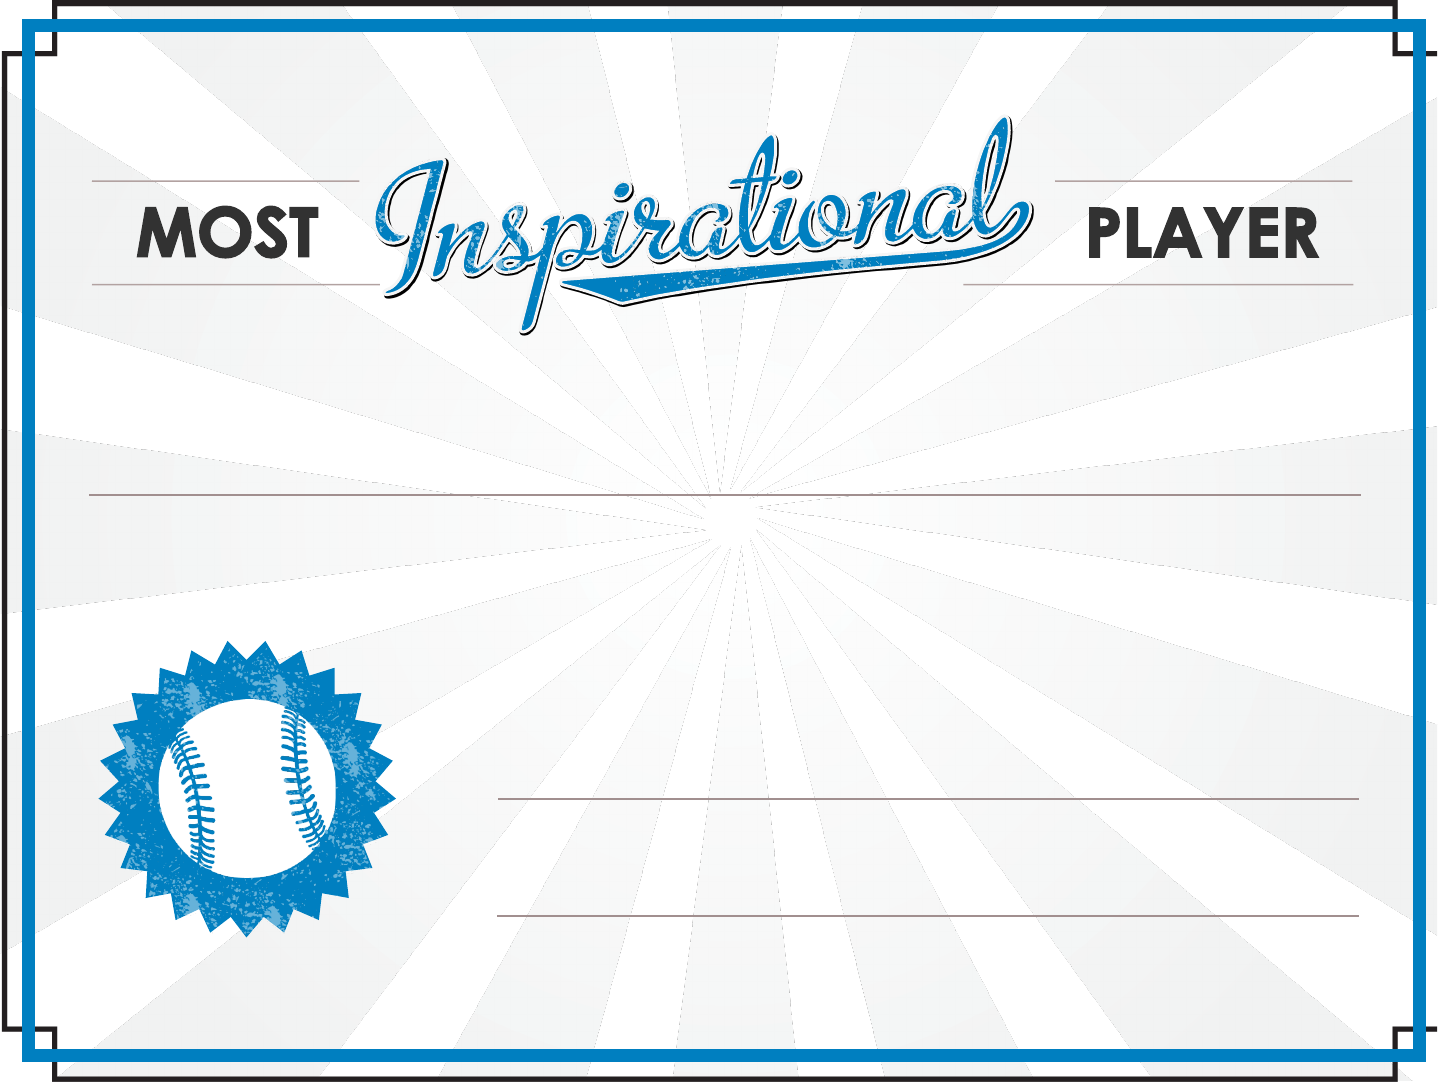 Most Inspirational Player Award Certificate